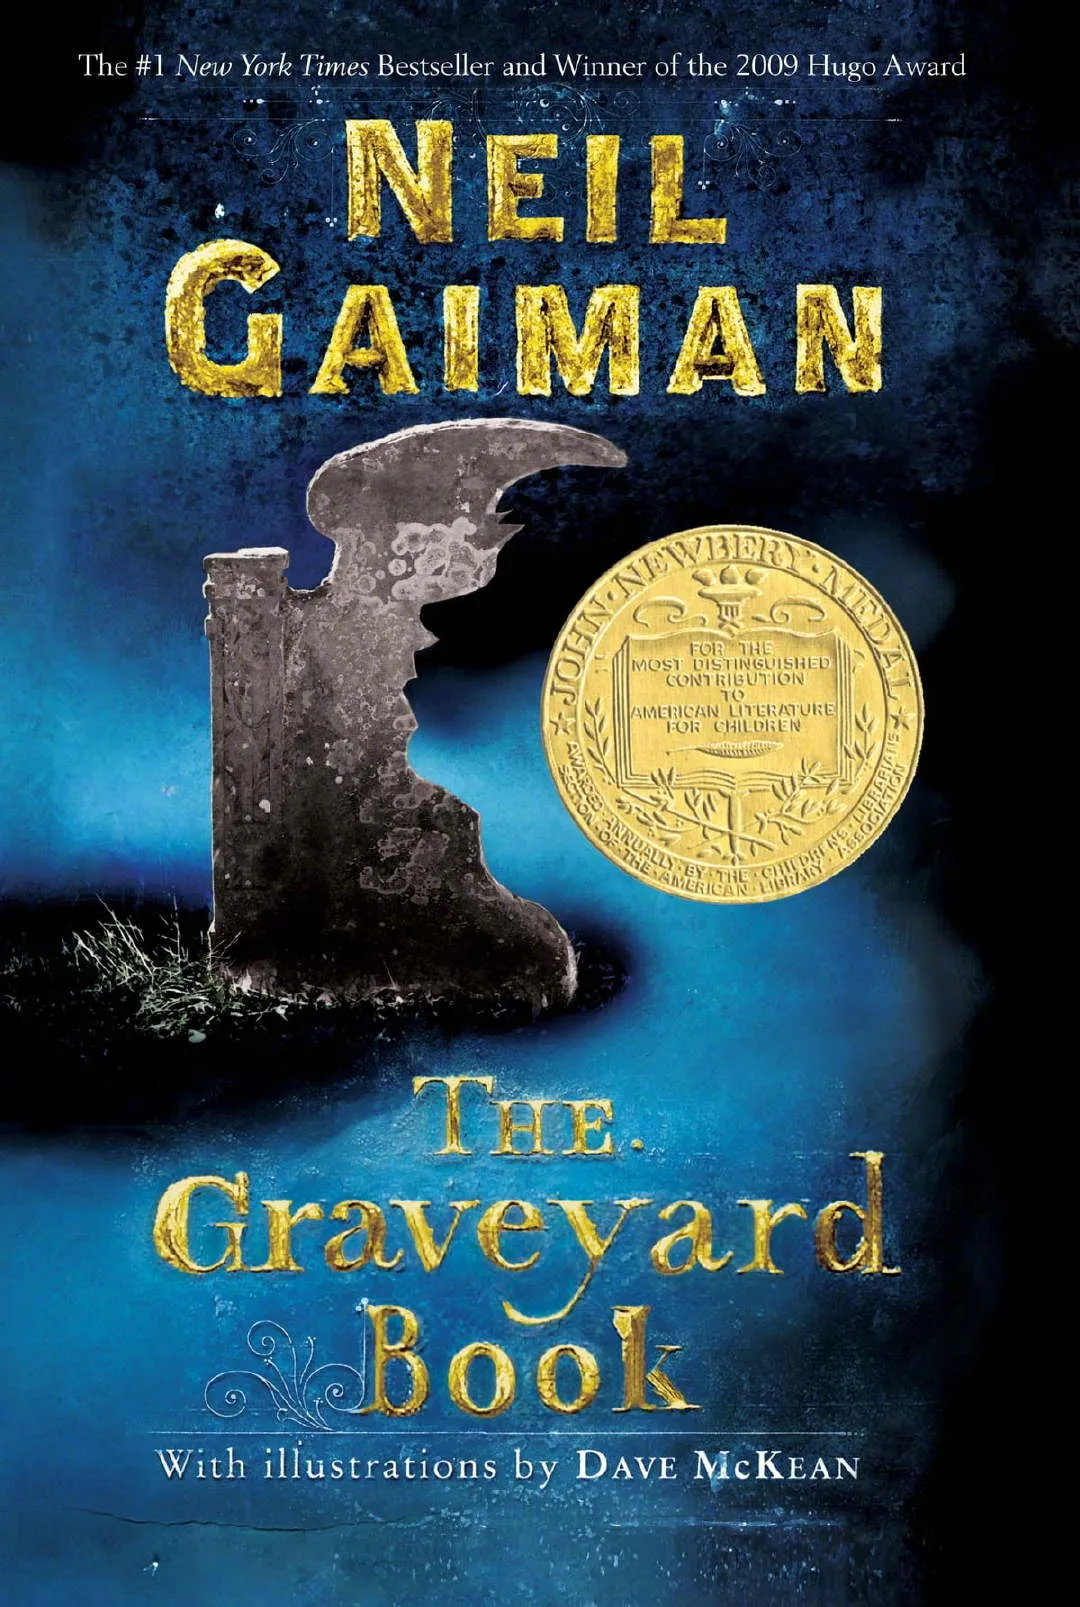 Disney to make film version of Neil Gaiman's acclaimed novel 'The Graveyard Book', directed by Marc Forster | FMV6